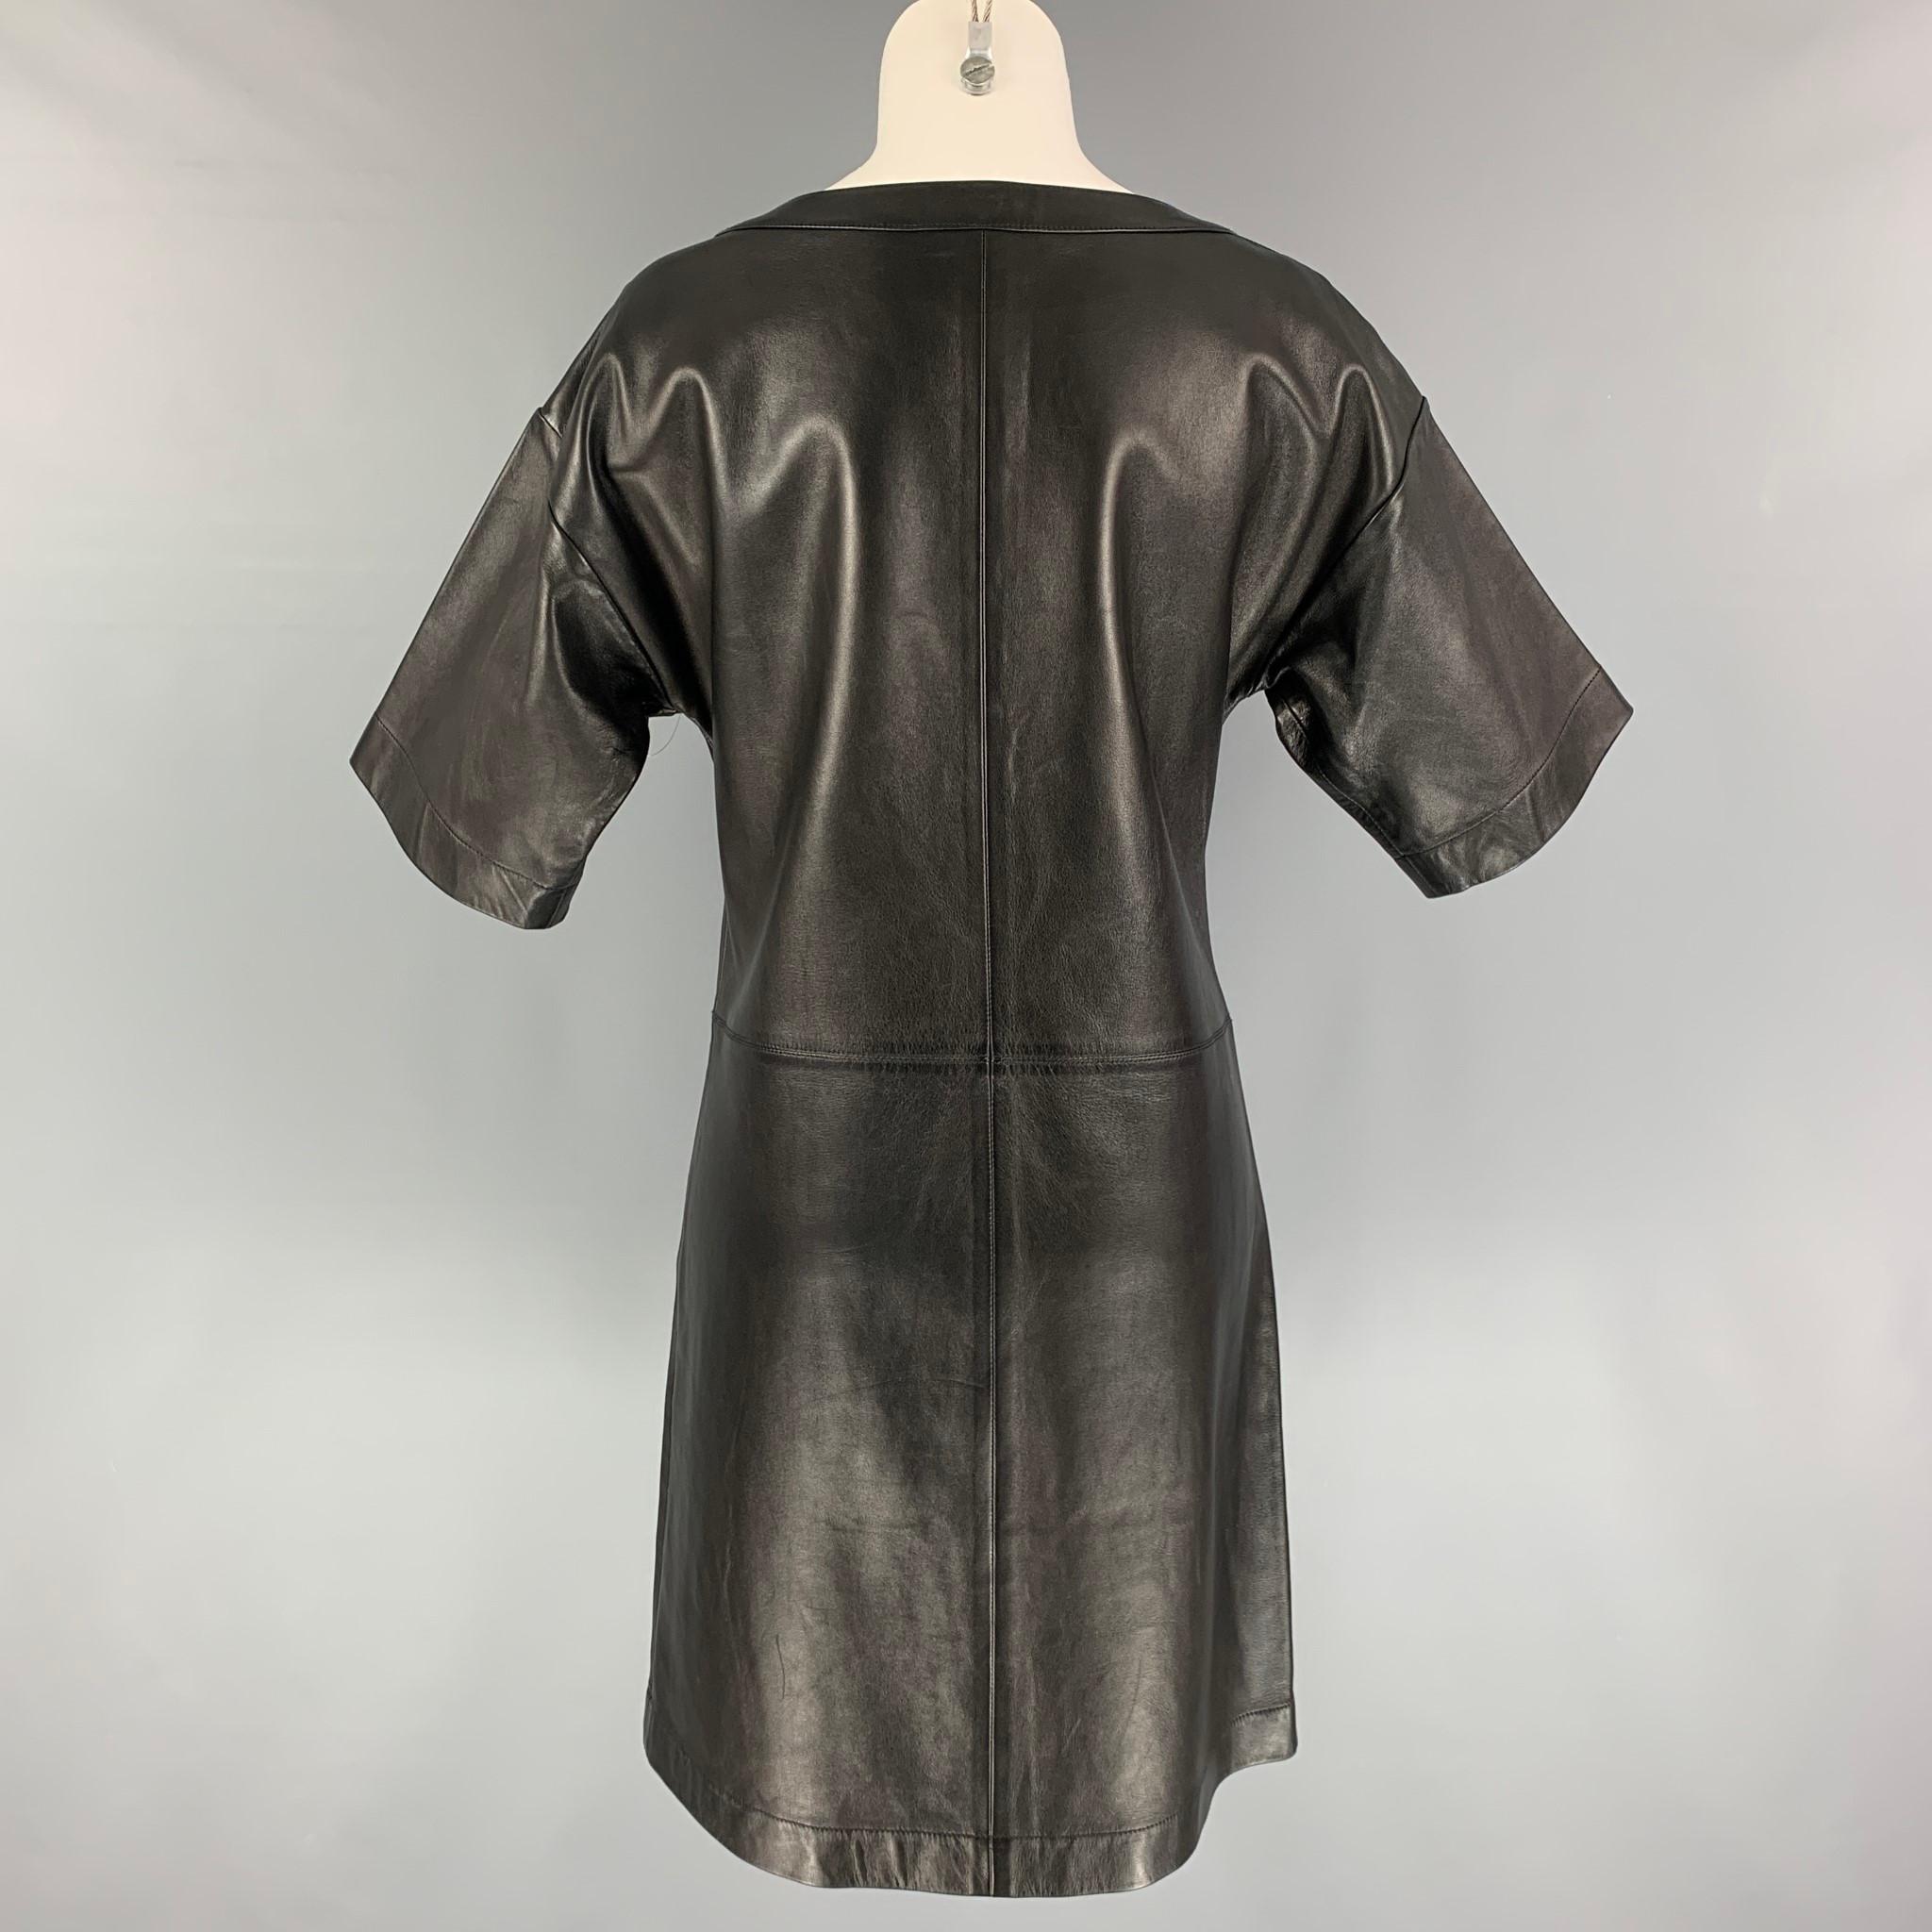 michael kors black and silver dress